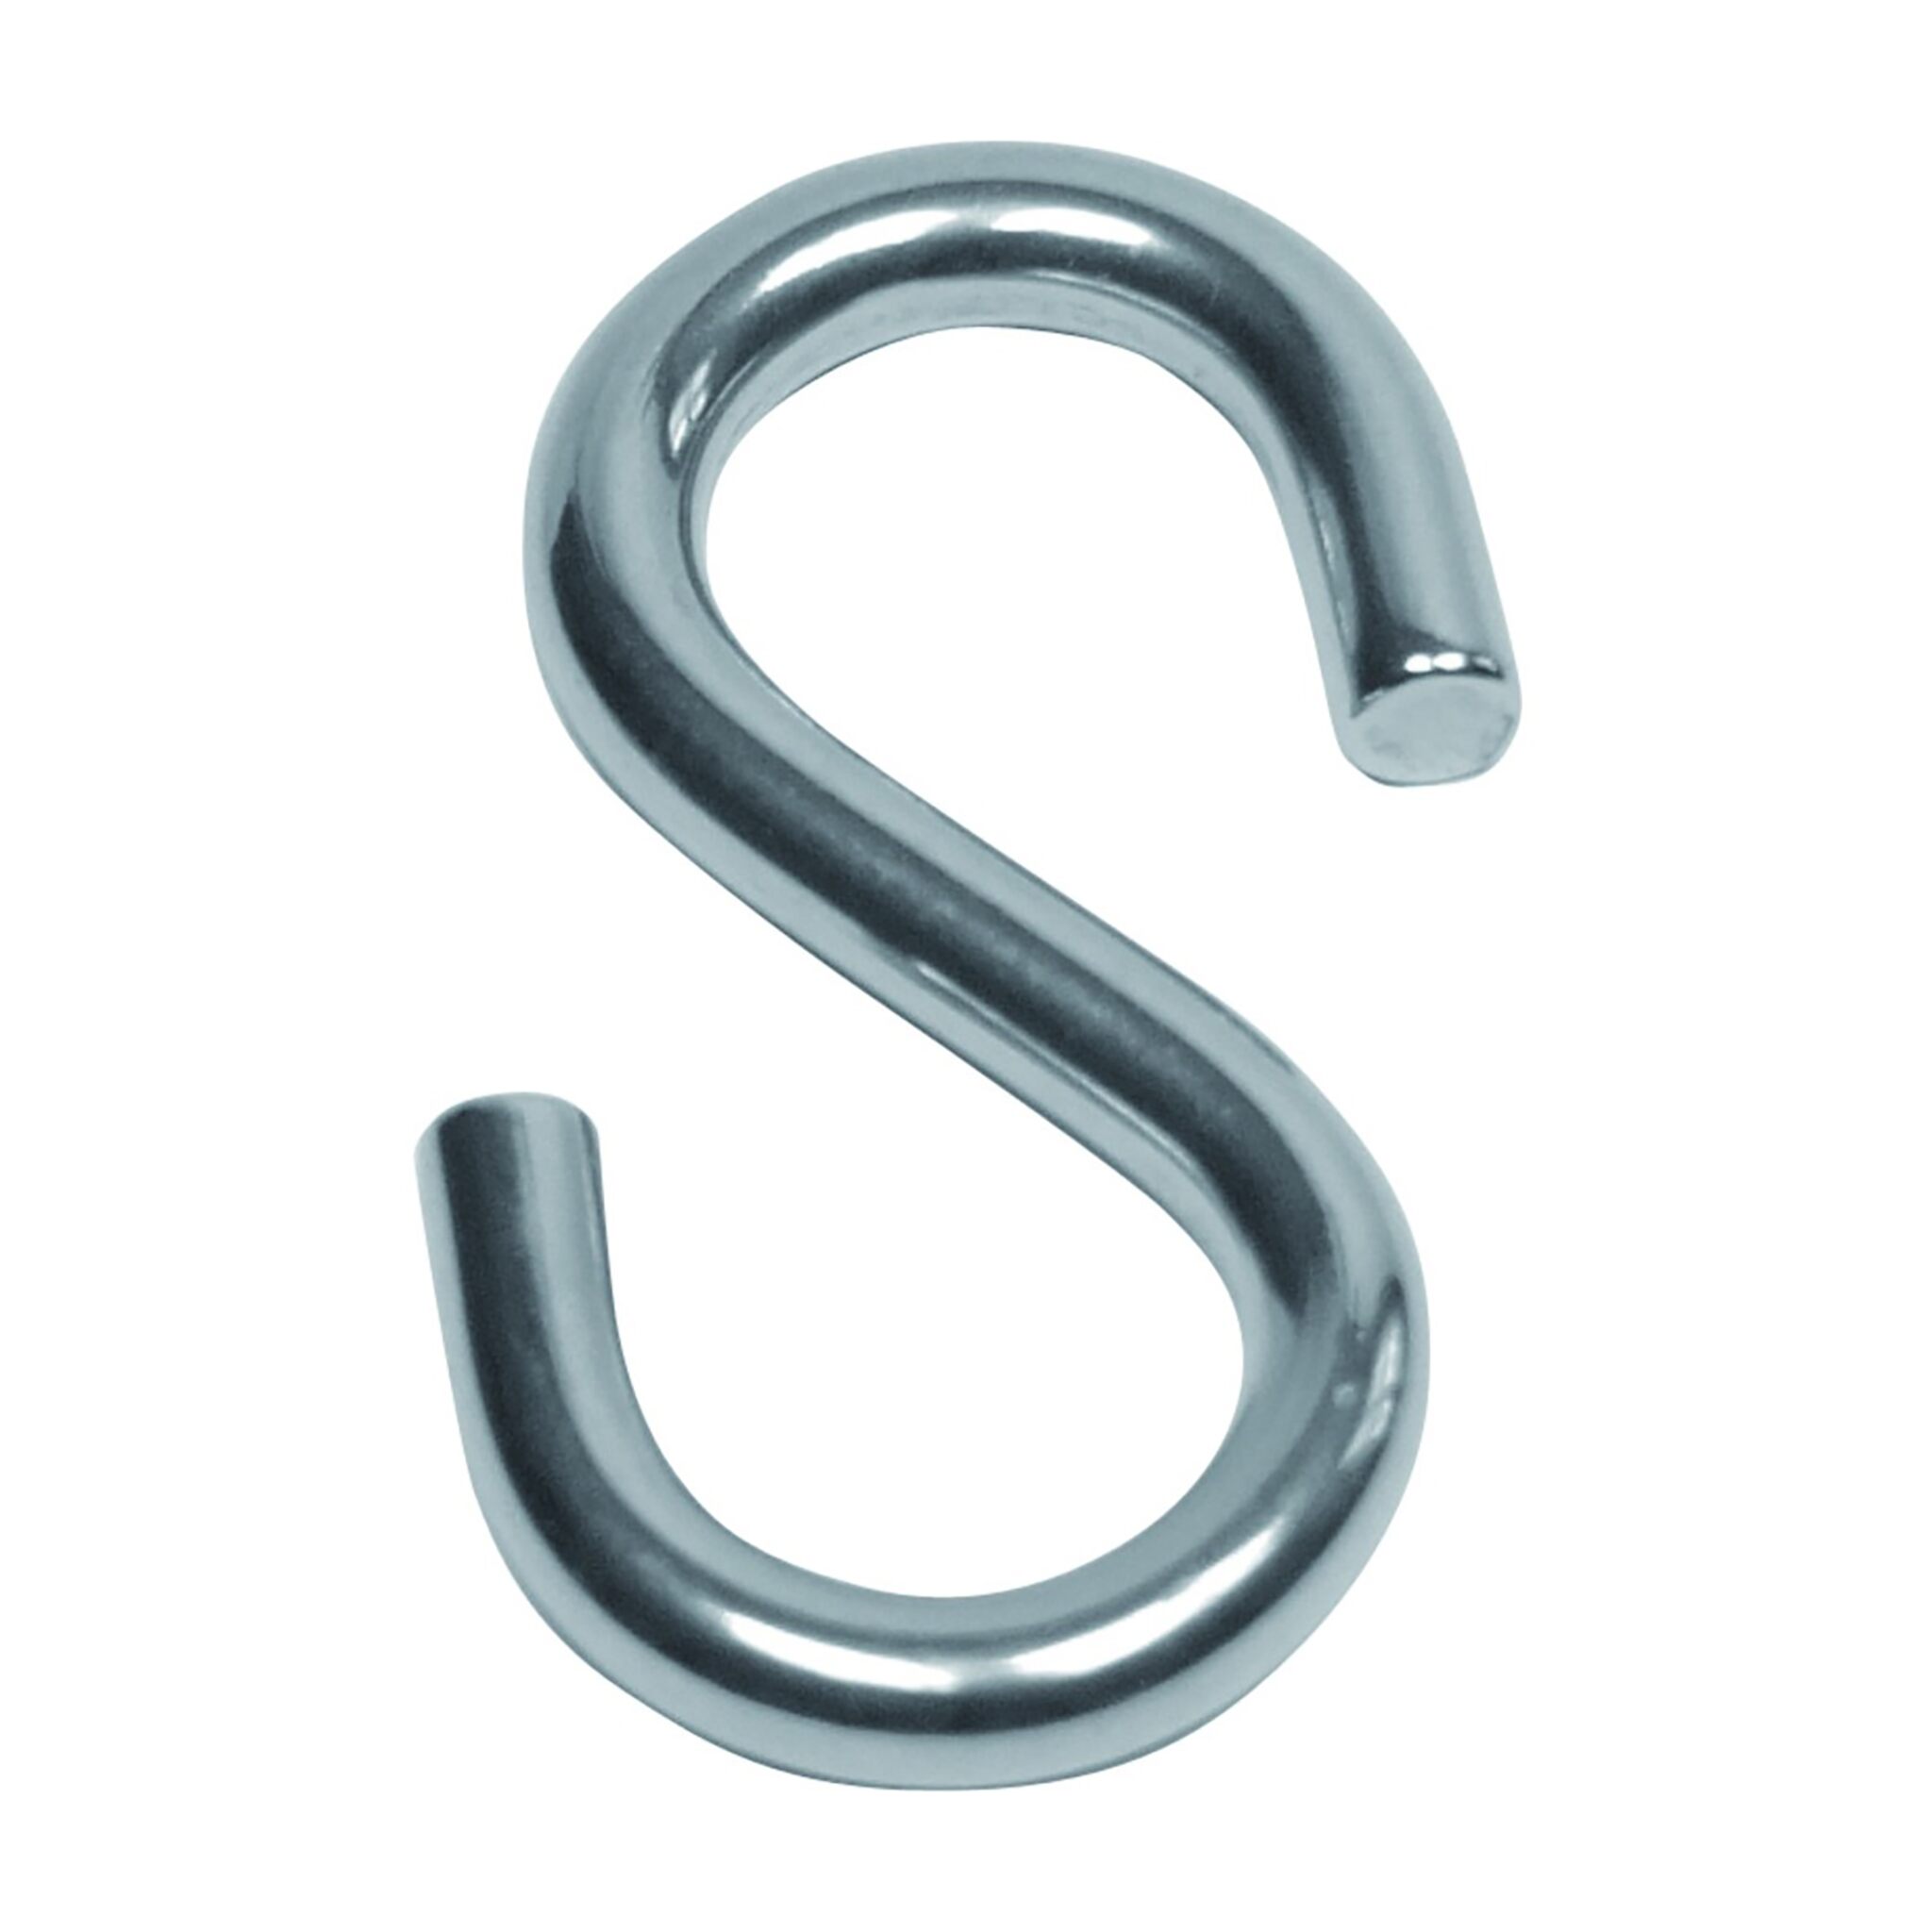 Stainless steel S hook